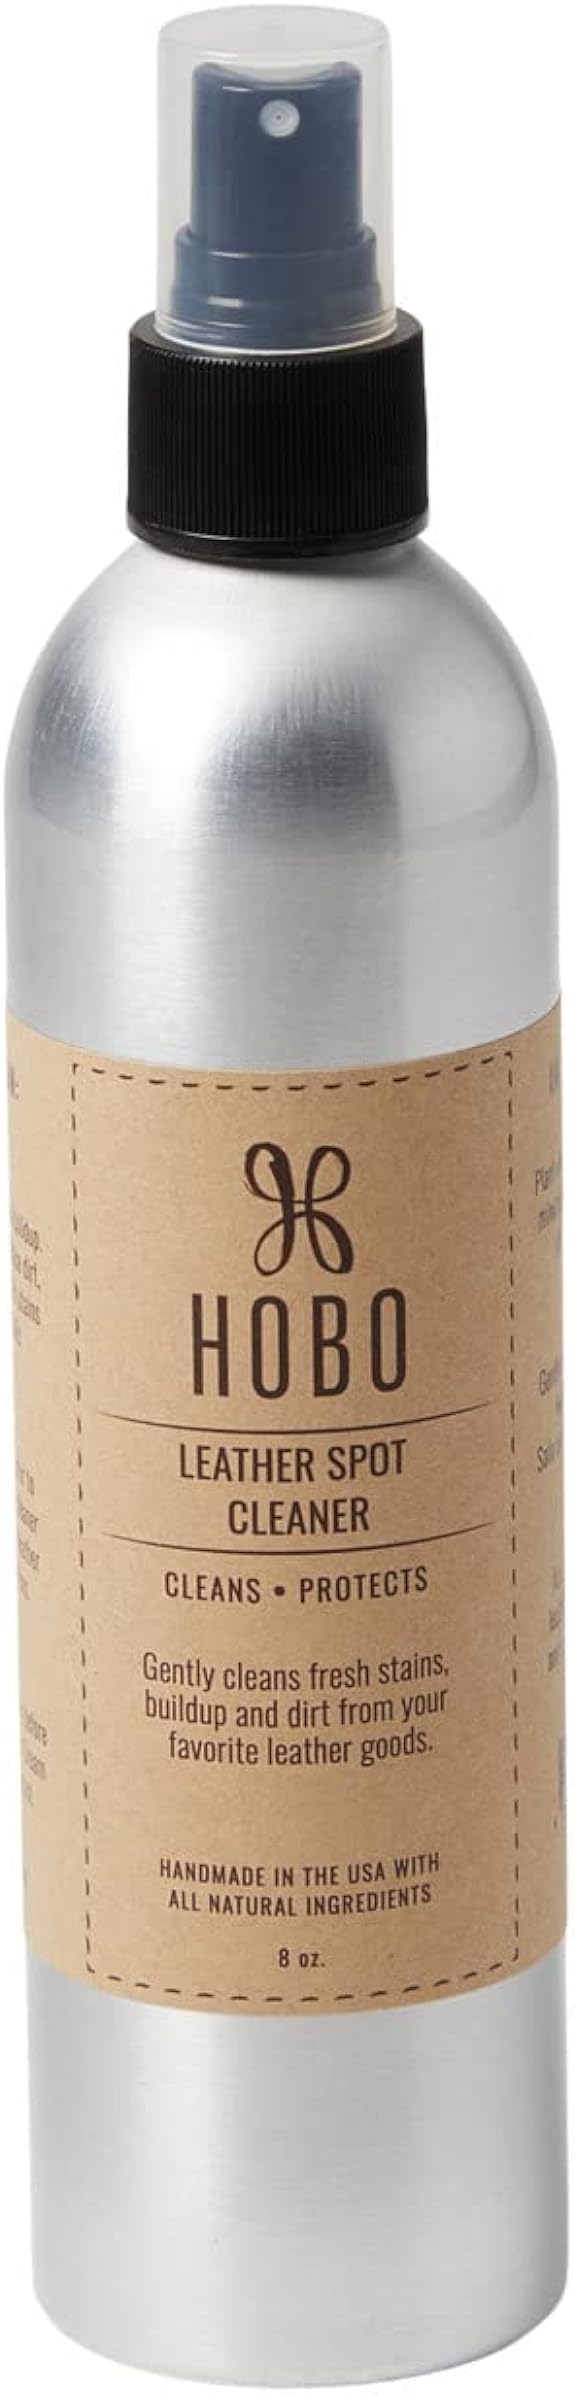 Hobo Leather Spot Cleaner